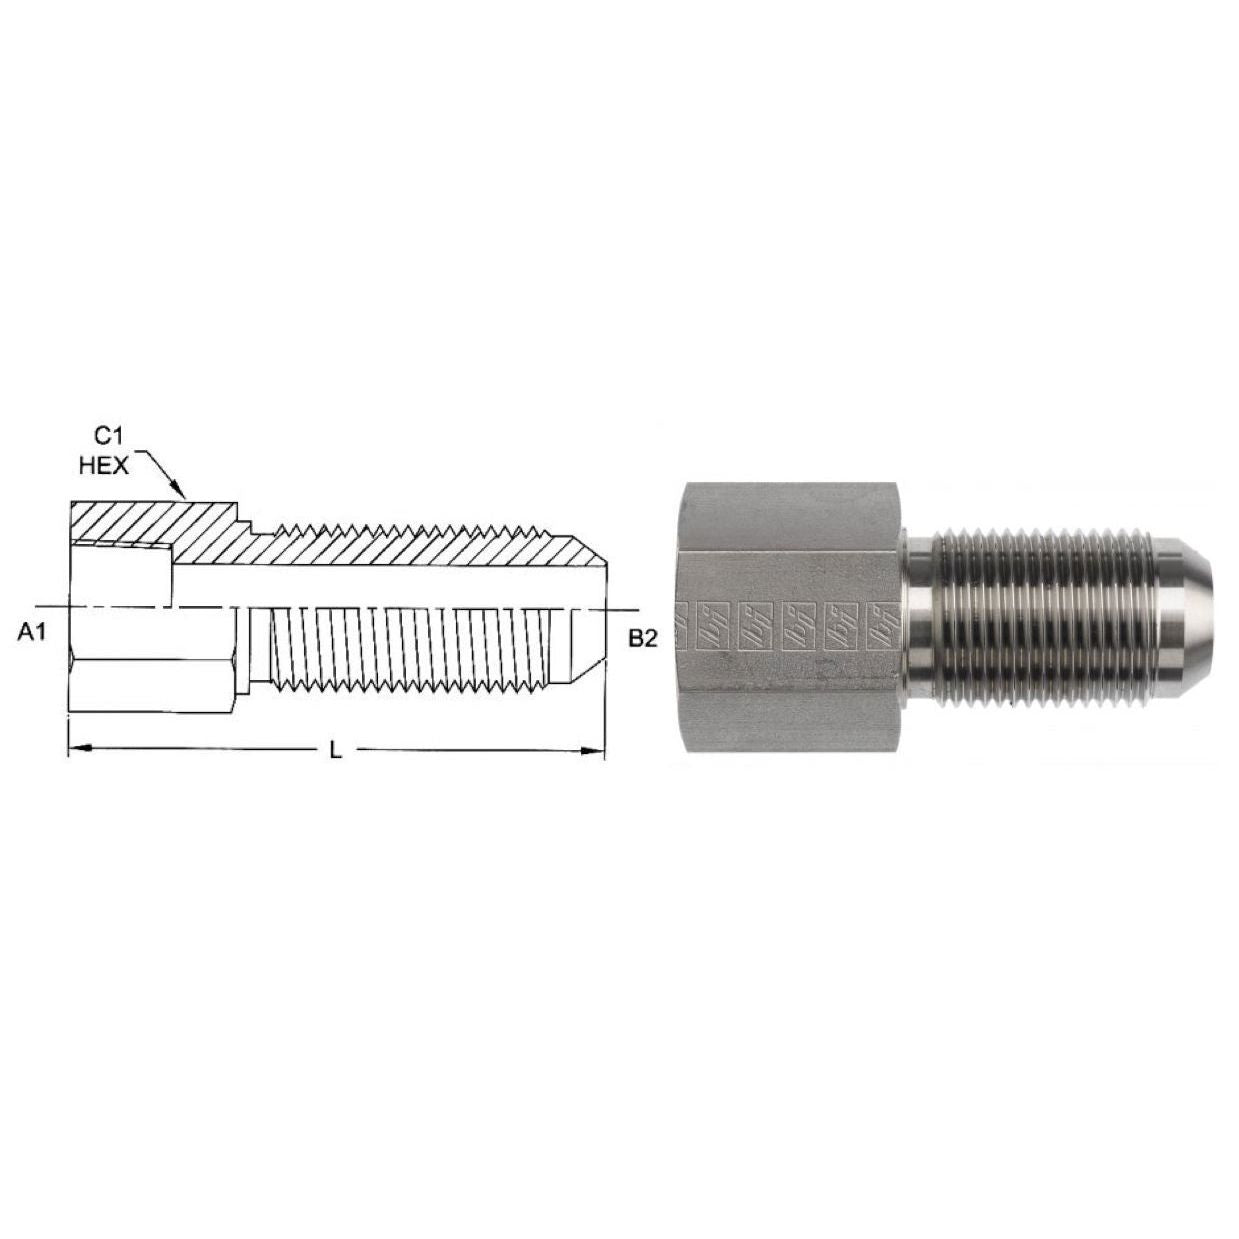 2705-02-04-SS : OneHydraulics Bulkhead Adapter, Straight, 0.125 (1/8") JIC JIC x 0.25 (1/4") Male, Stainless Steel, 6000psi